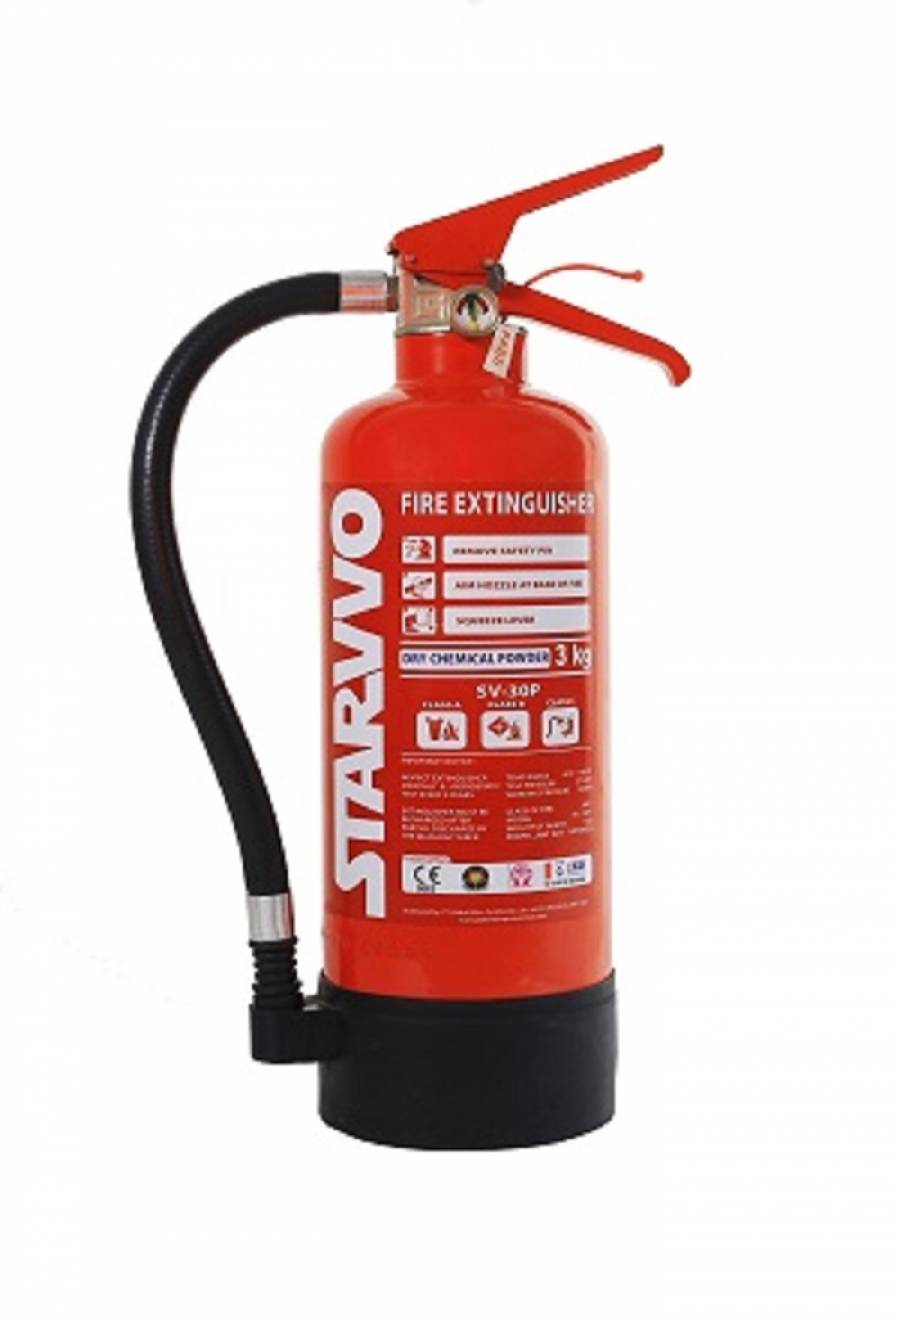 APAR Jenis Dry Chemical Powder FireSystem id